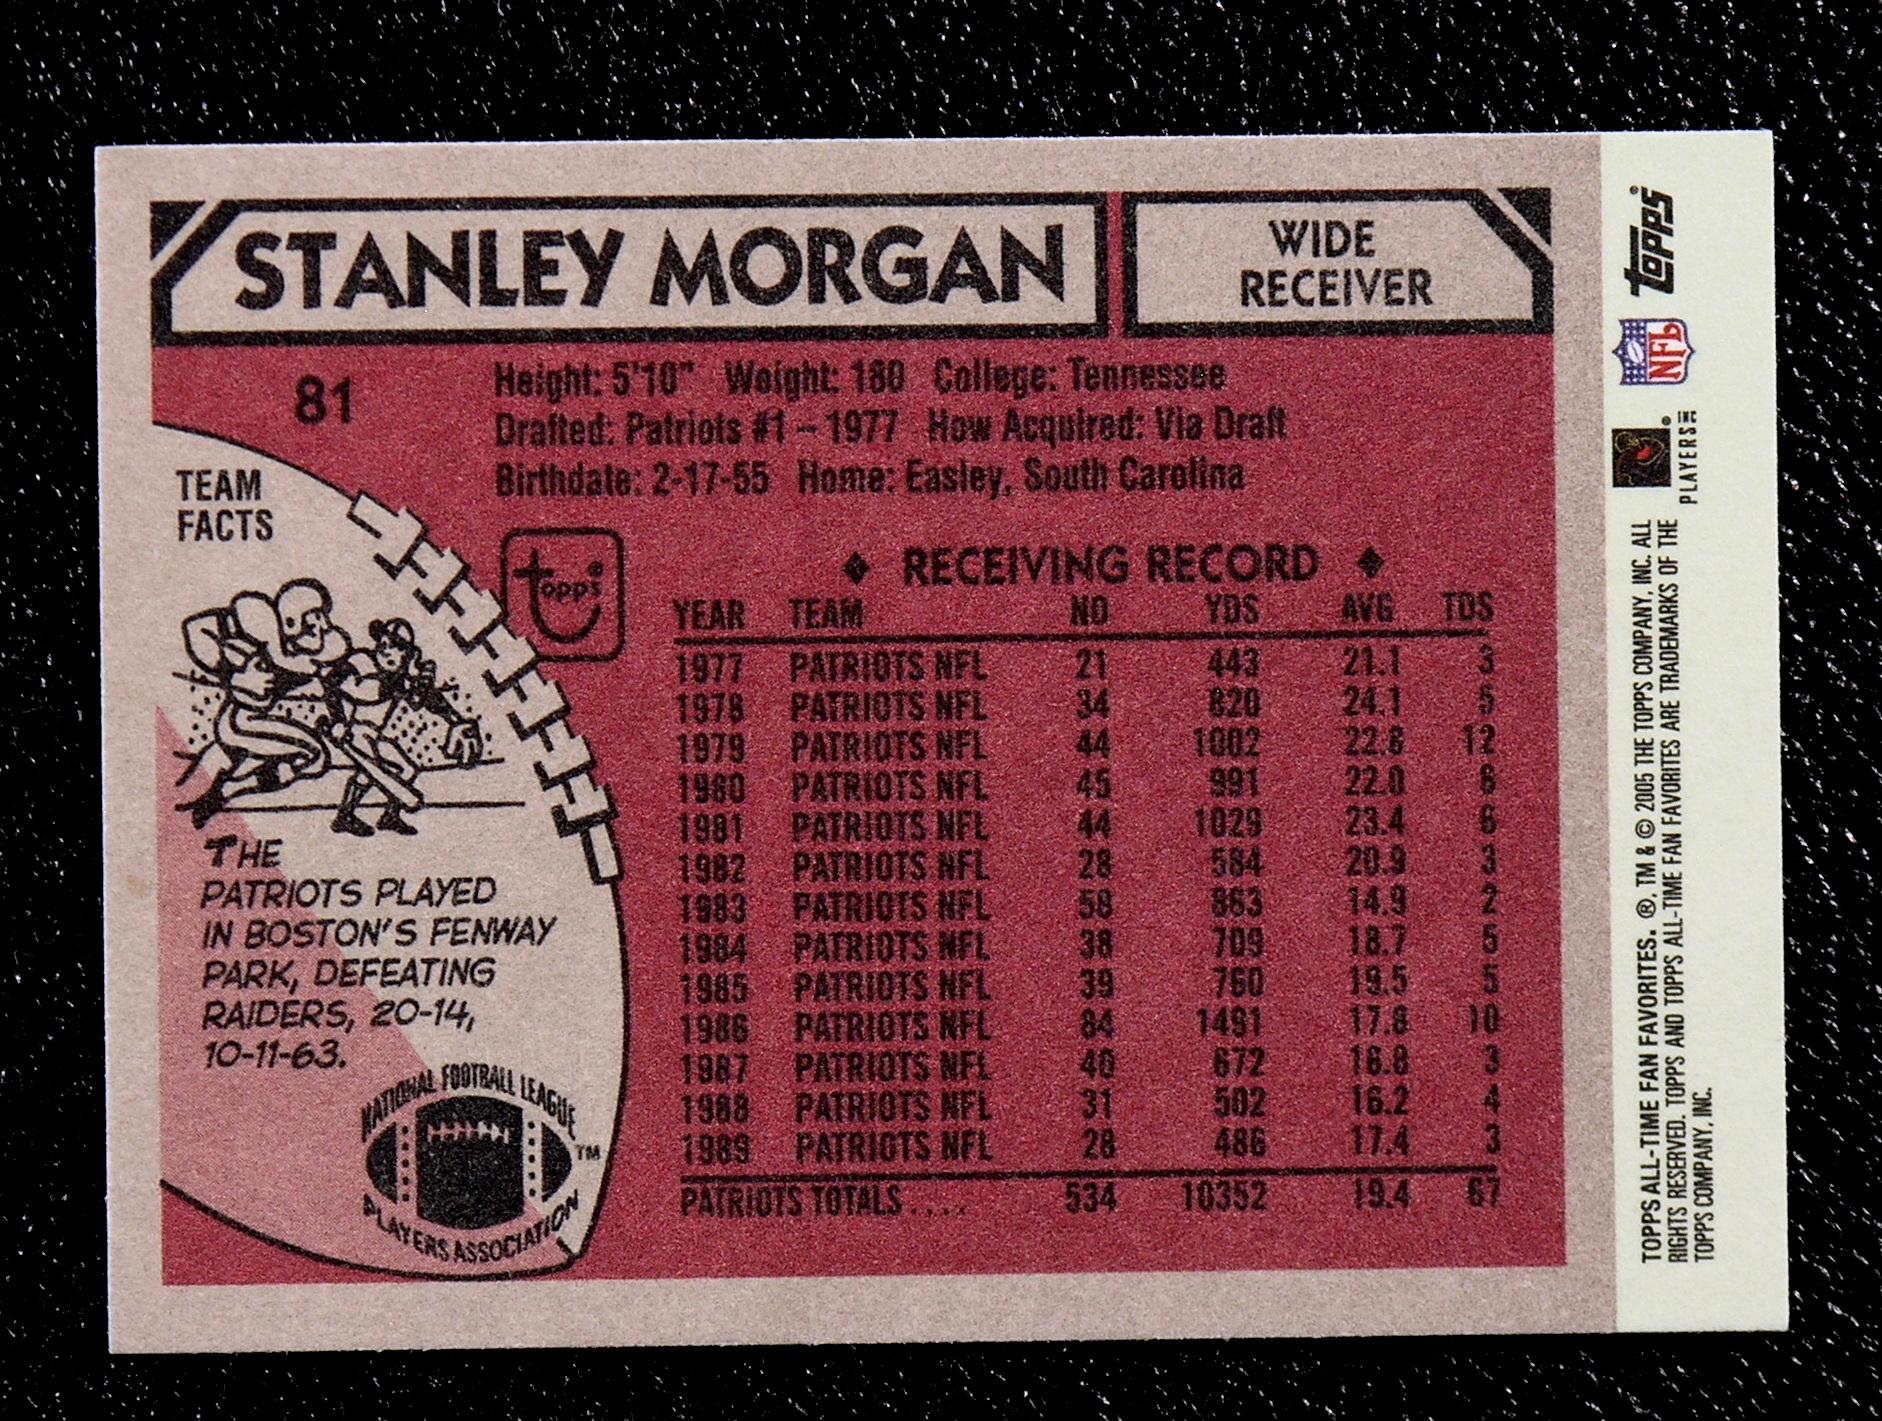 2006 Topps "Grogan's Heros" AUTOGRAGHED Football Card #81 Stanley Morgan Ne